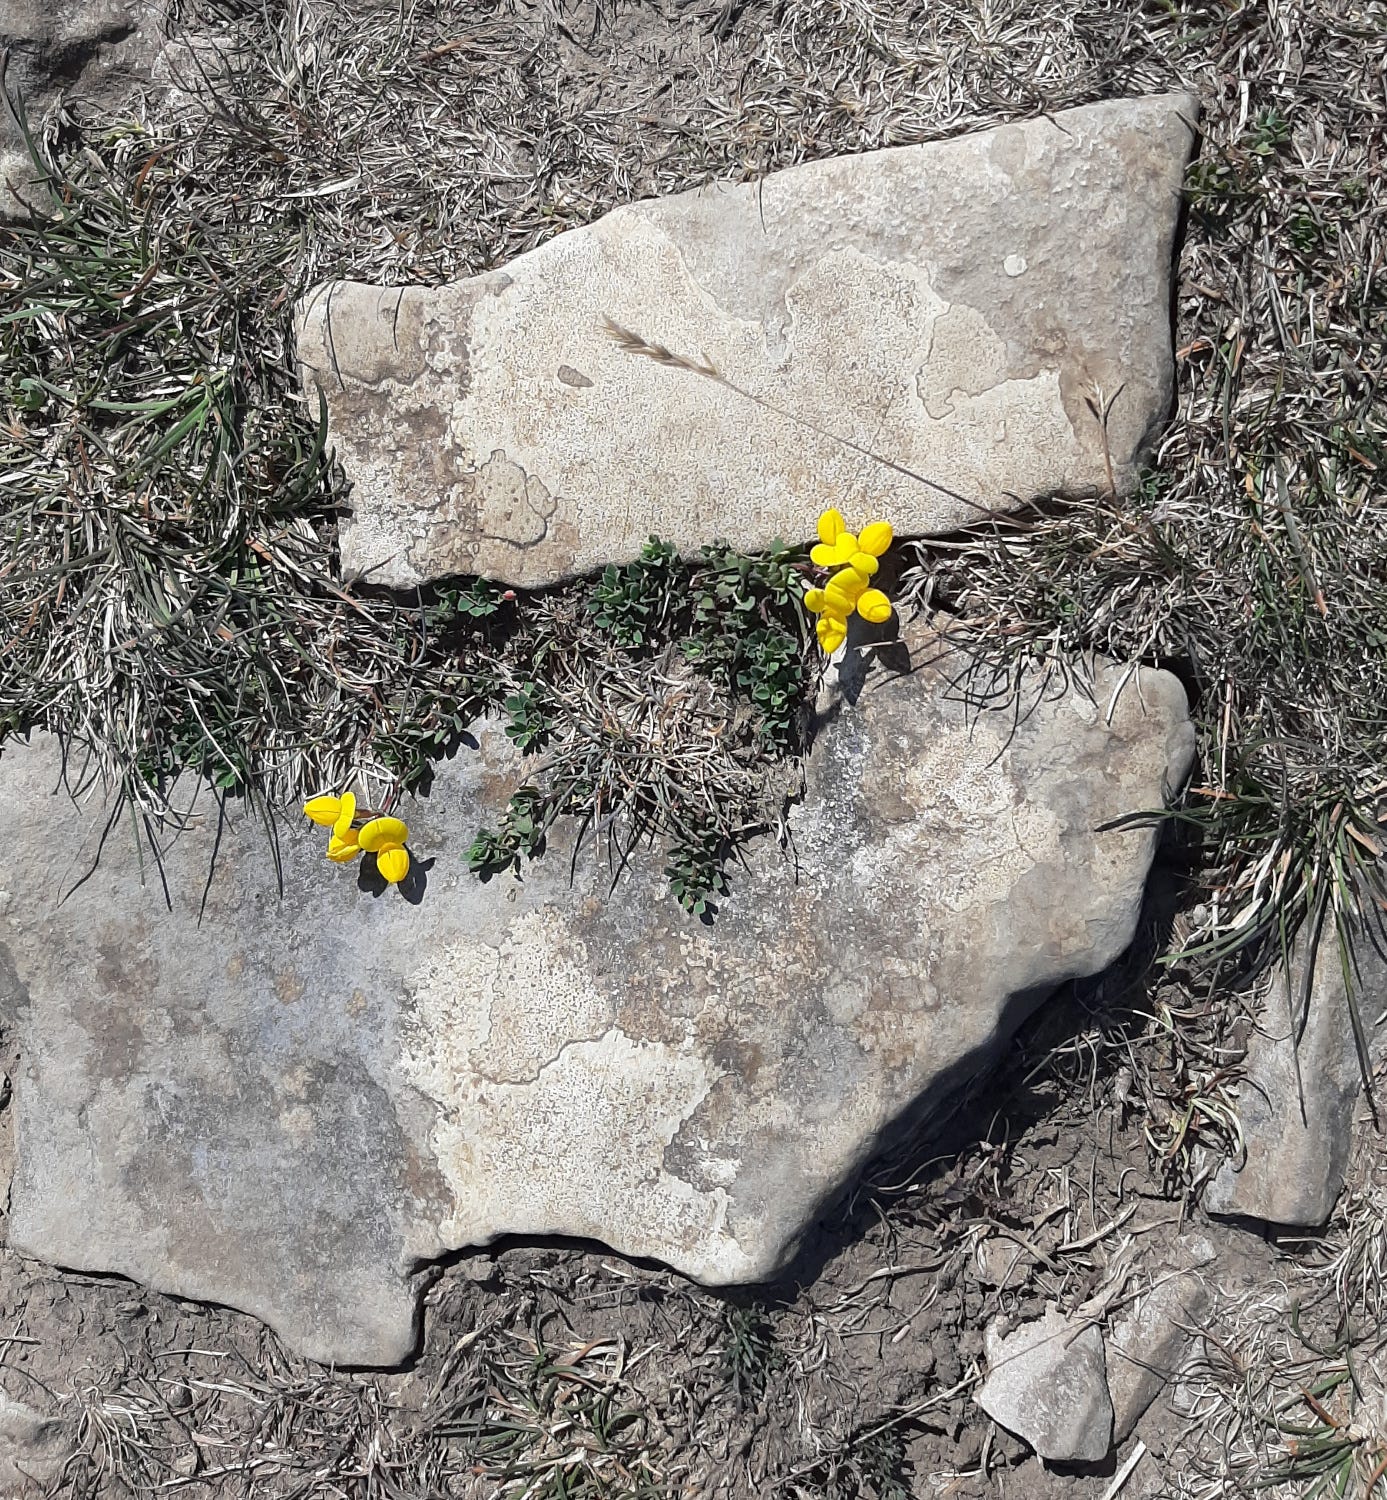 Grey flat limestone with yellow flowers growing next to them amongst grass